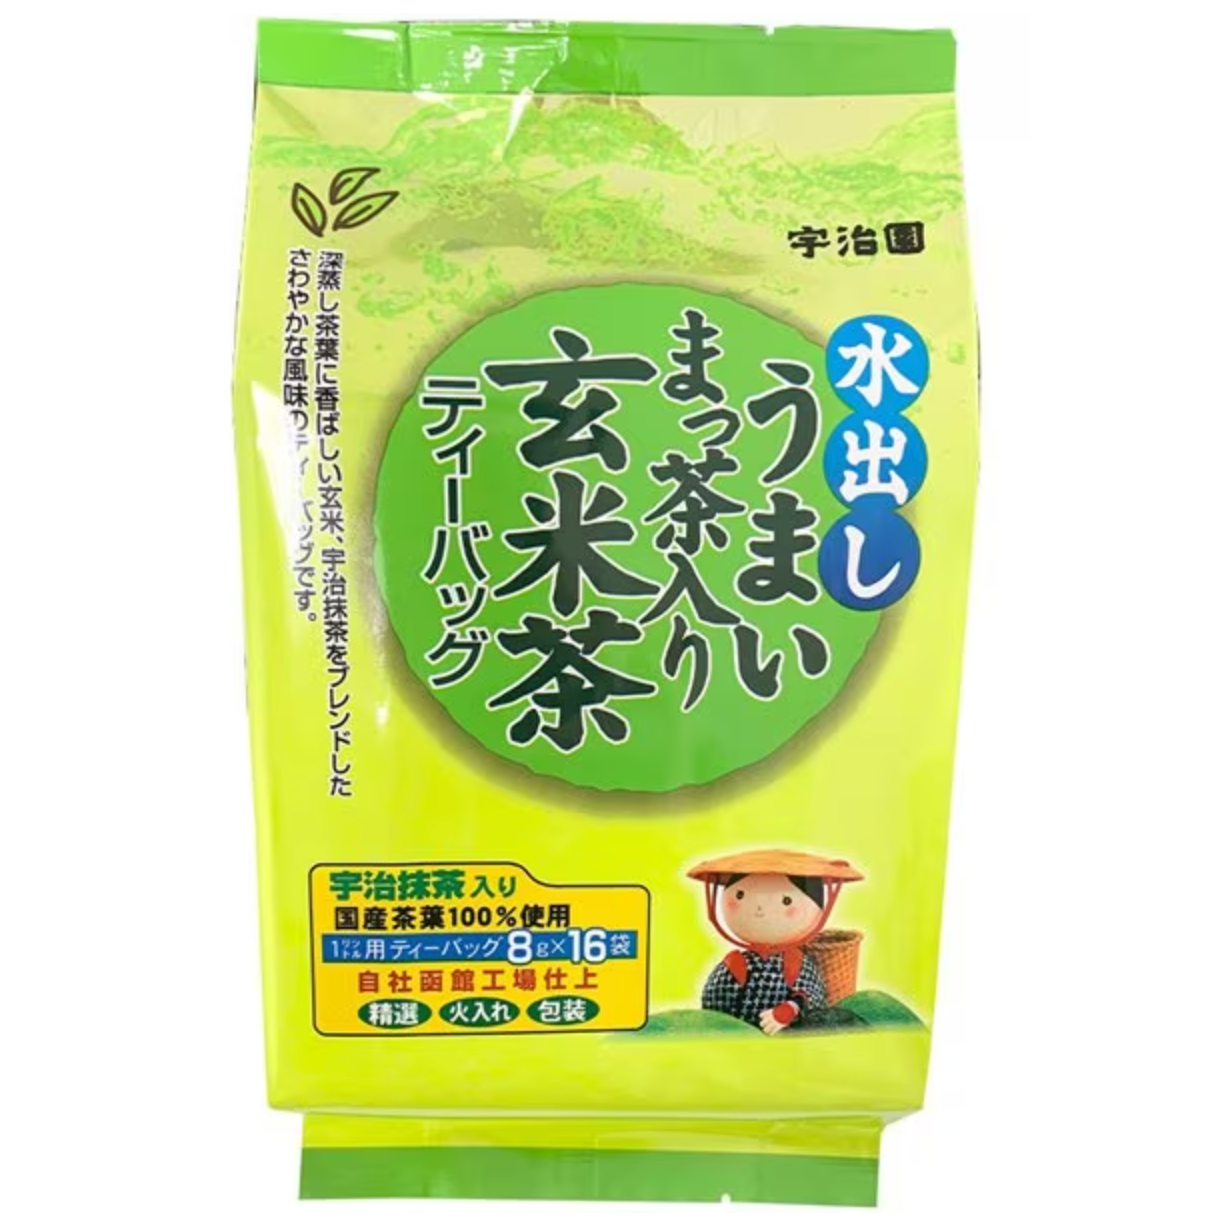 Ujien Cold Brew Delicious Matcha Genmaicha Tea Bag 8gx16P